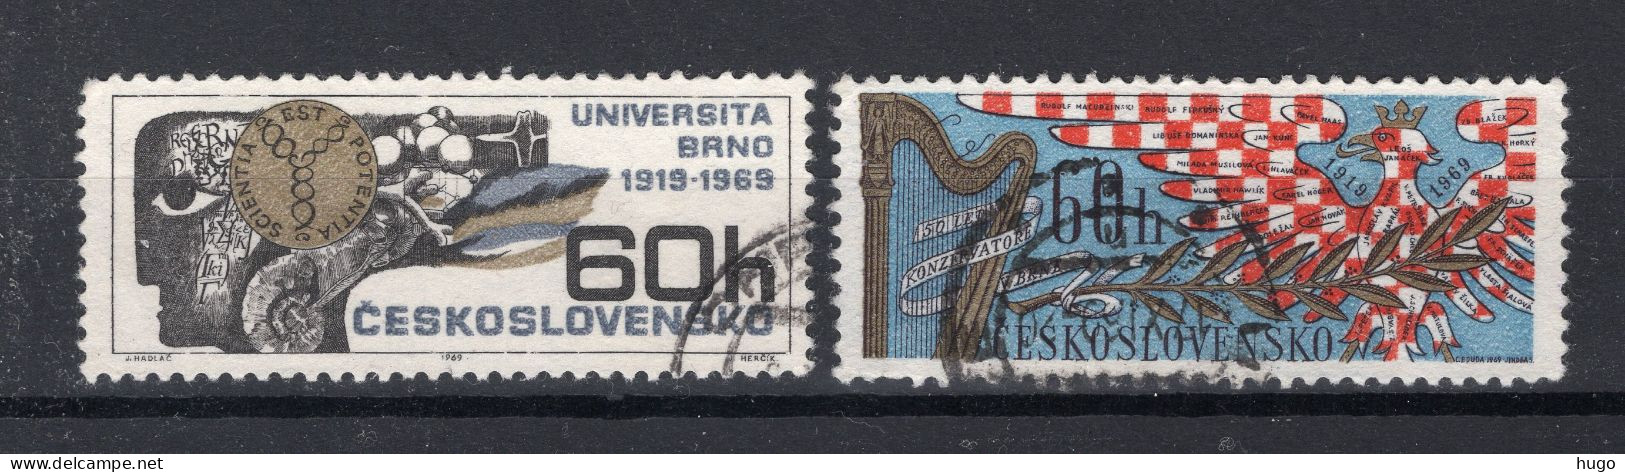 TSJECHOSLOVAKIJE Yt. 1708/1709° Gestempeld 1969 - Used Stamps